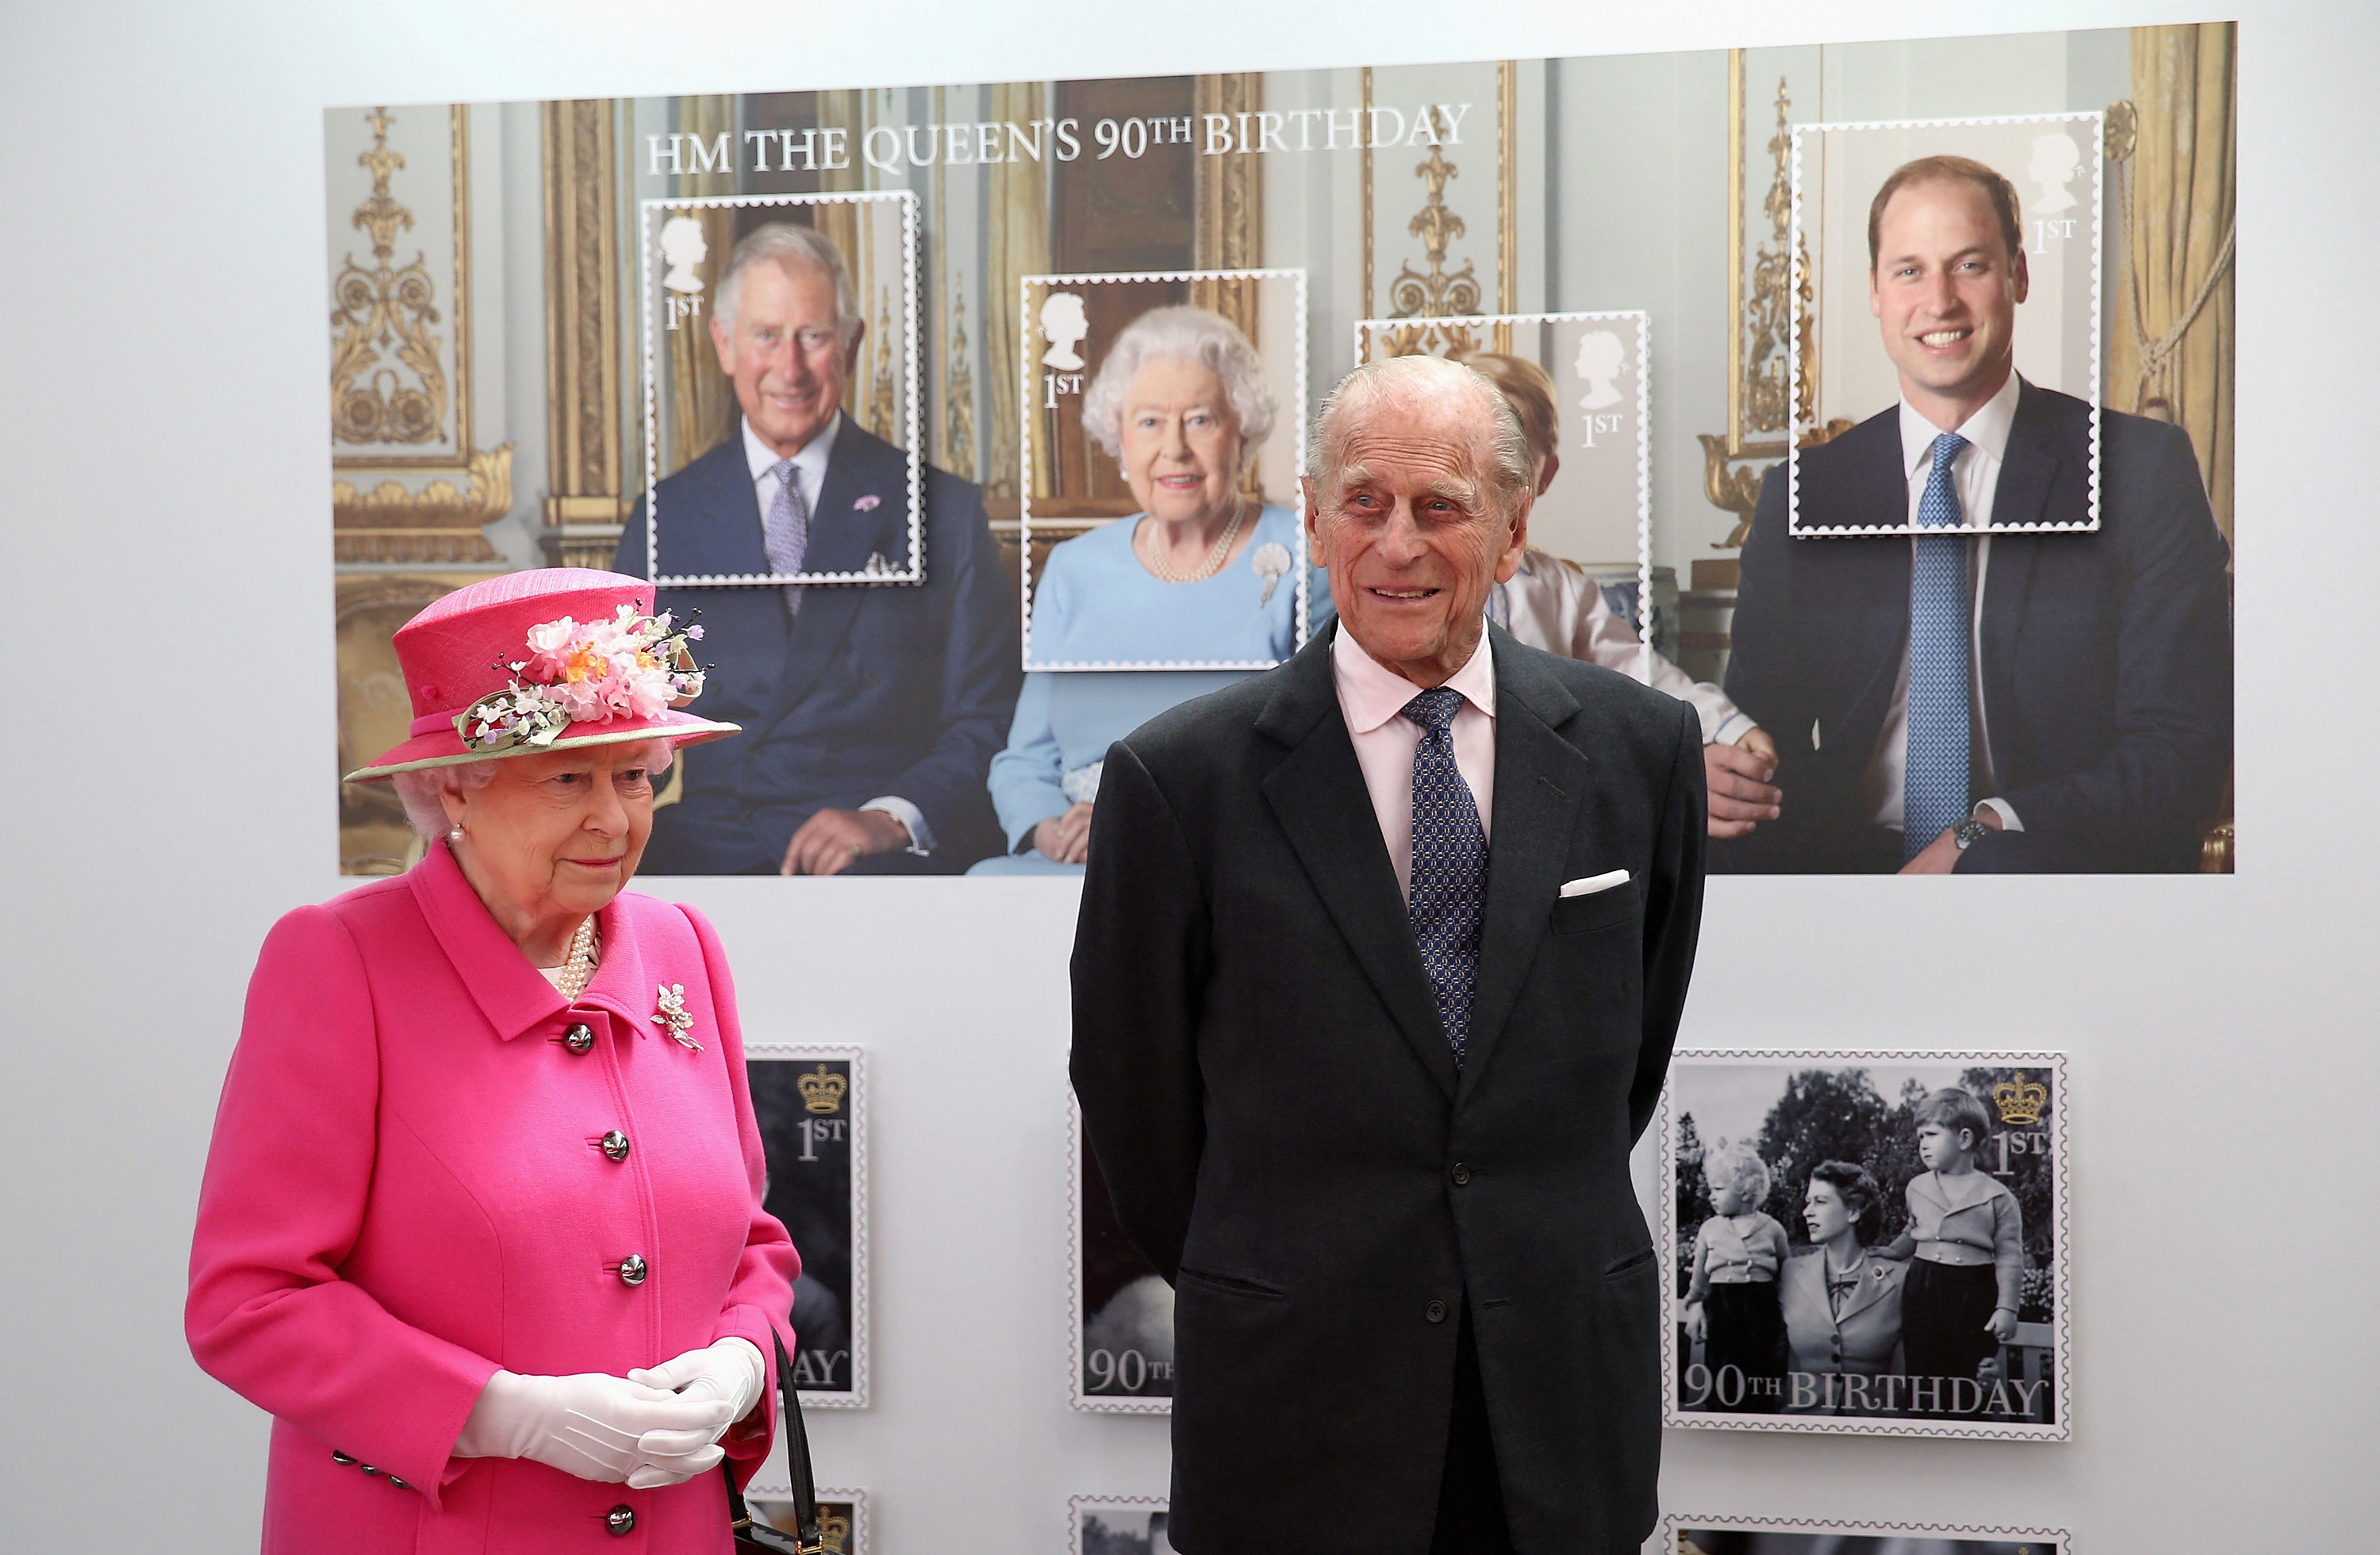 Queen Elizabeth II and Prince Philip, Duke of Edinburgh visit the Queen Elizabeth II delivery office in Windsor with Prince Philip